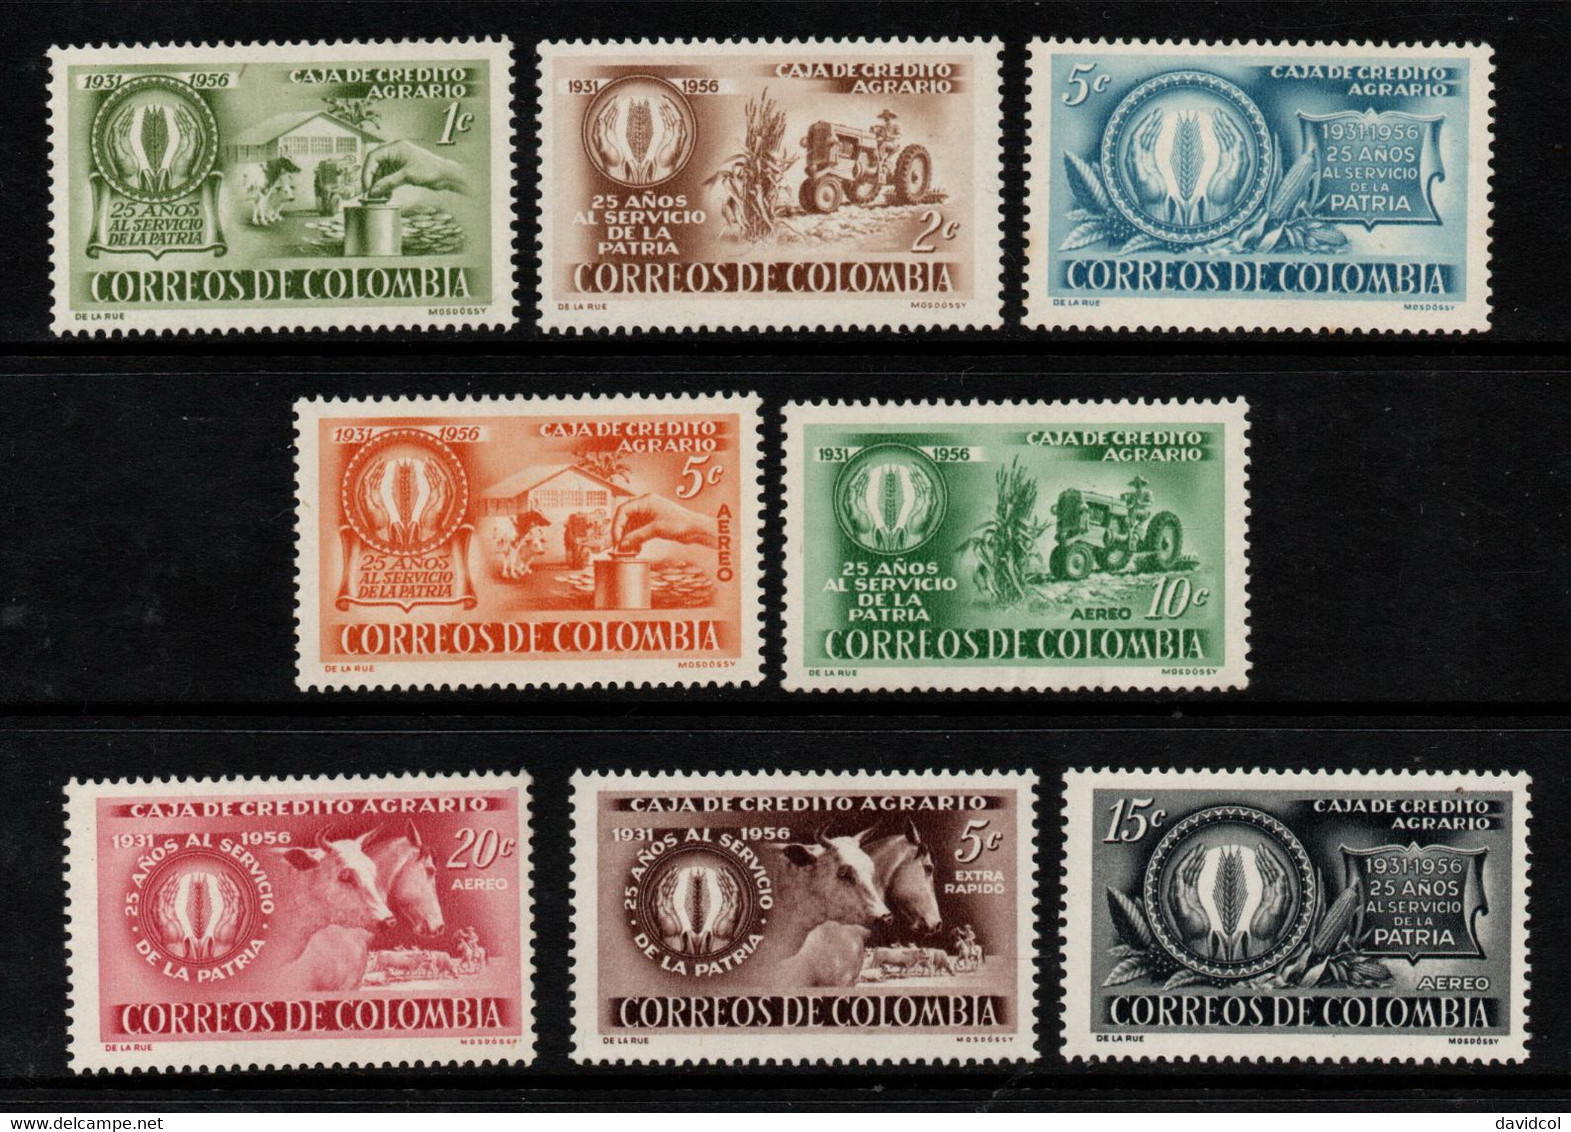 01- KOLUMBIEN - 1957 - MNH - MI#: 798-805 - 50 YEARS BANK "CAJA DE CREDITO AGRARIO" - Kolumbien